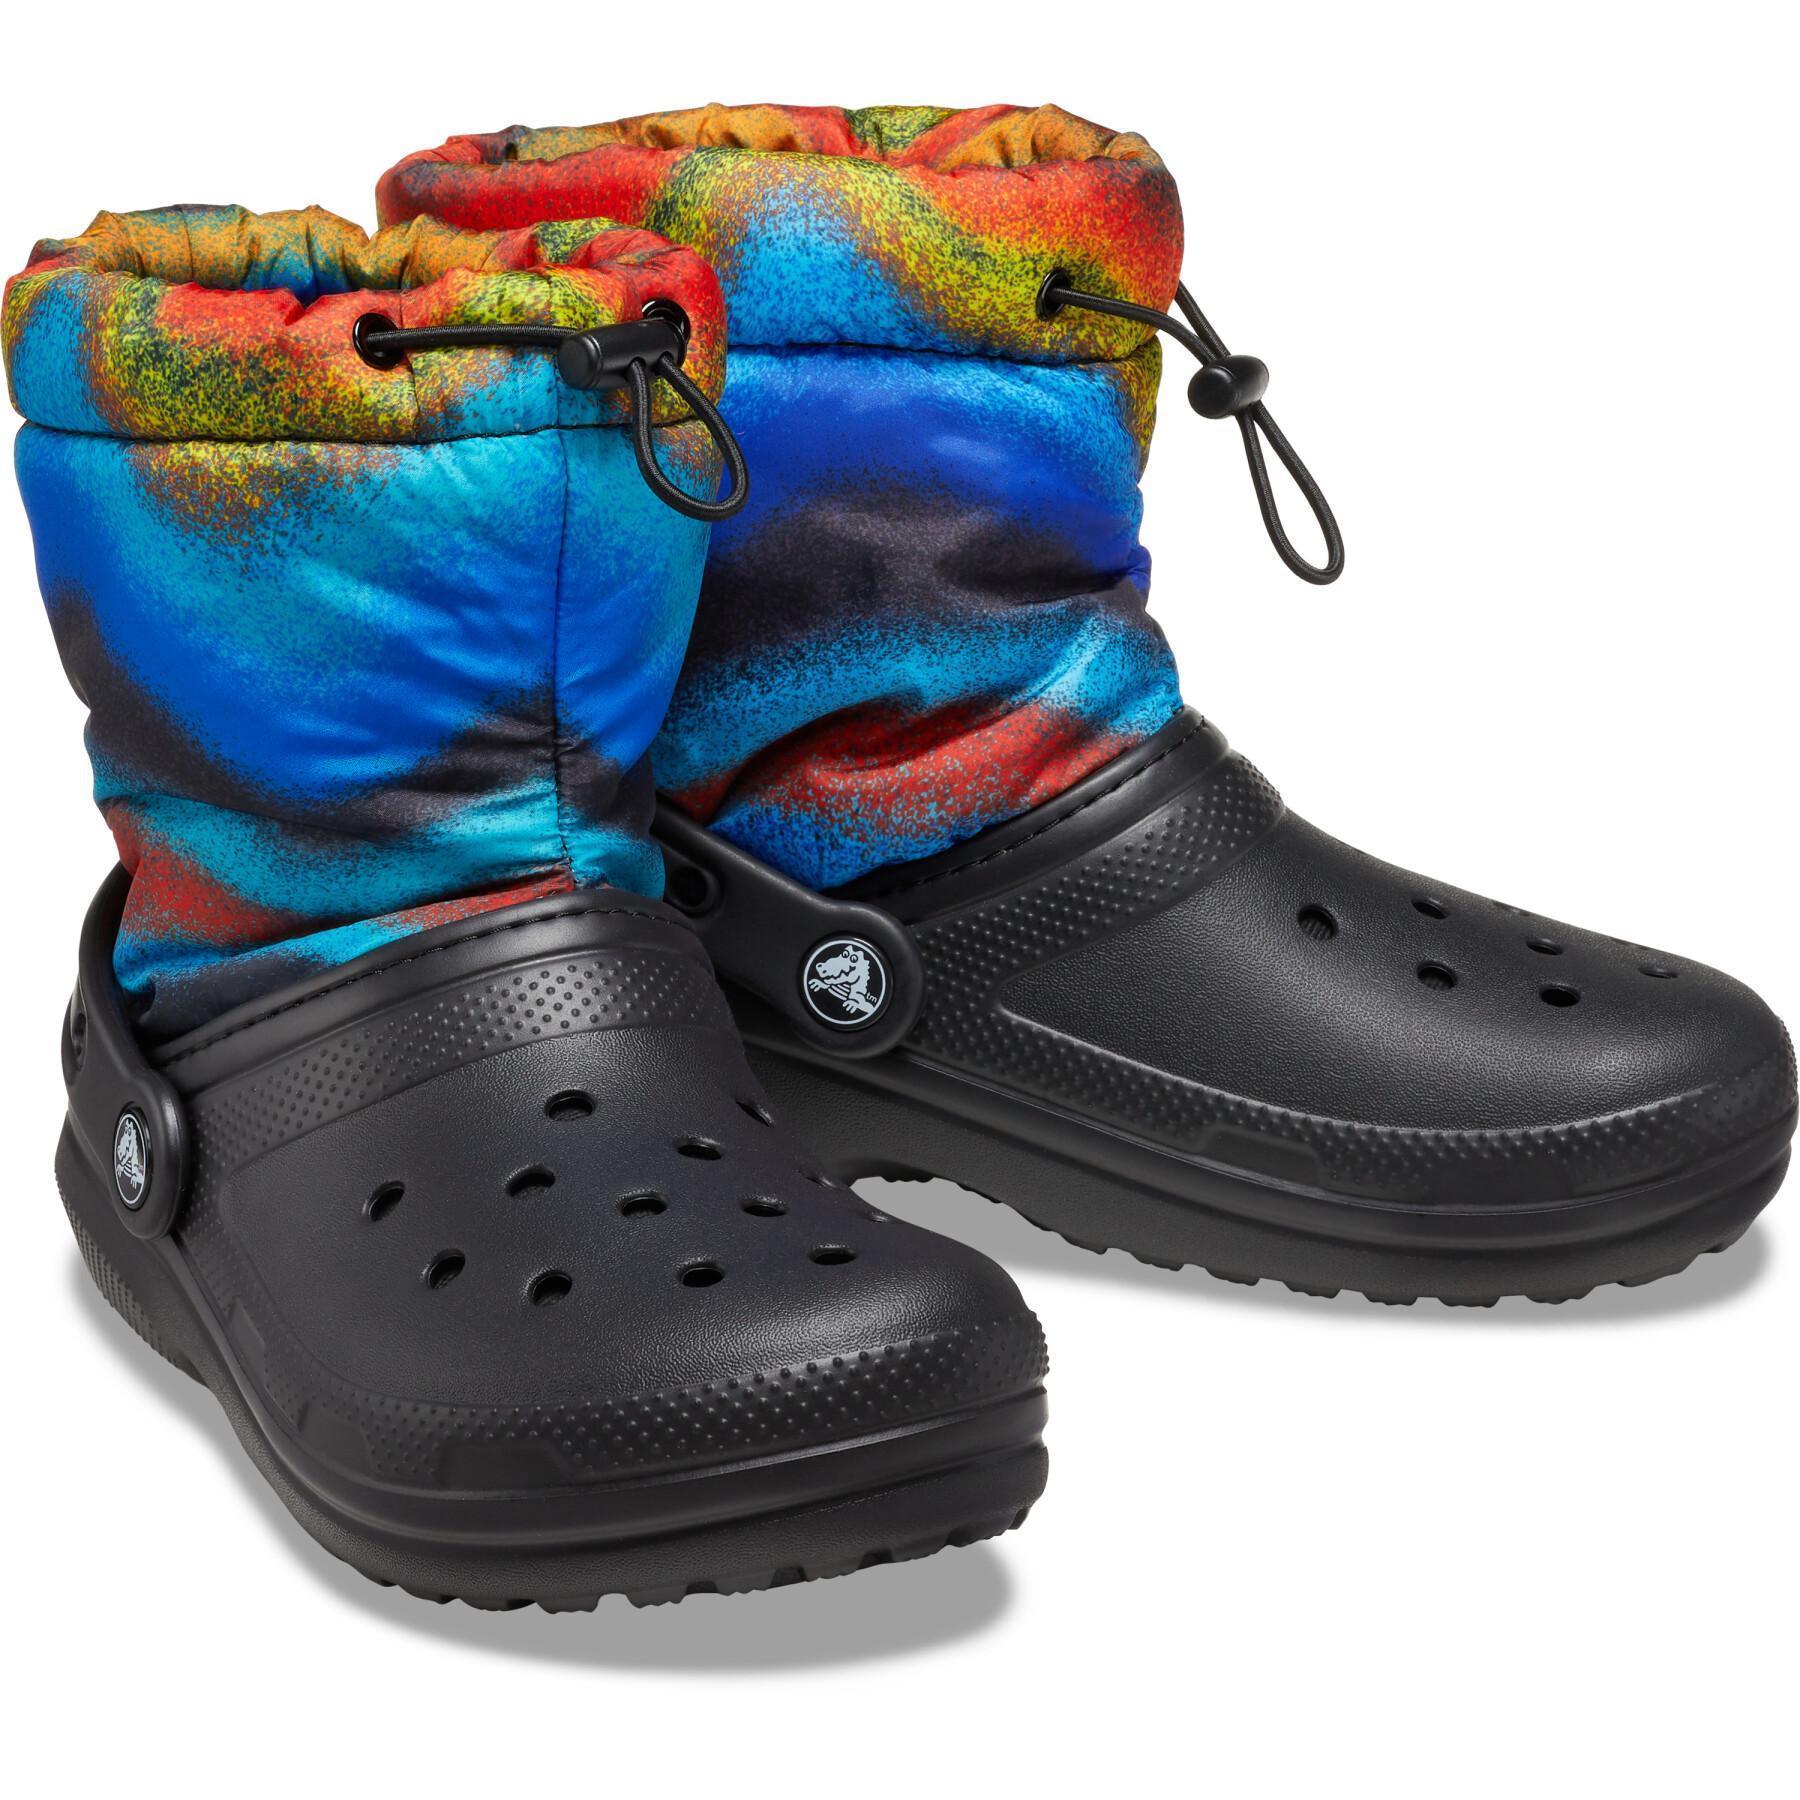 Children's boots Crocs Classic Spray Dye